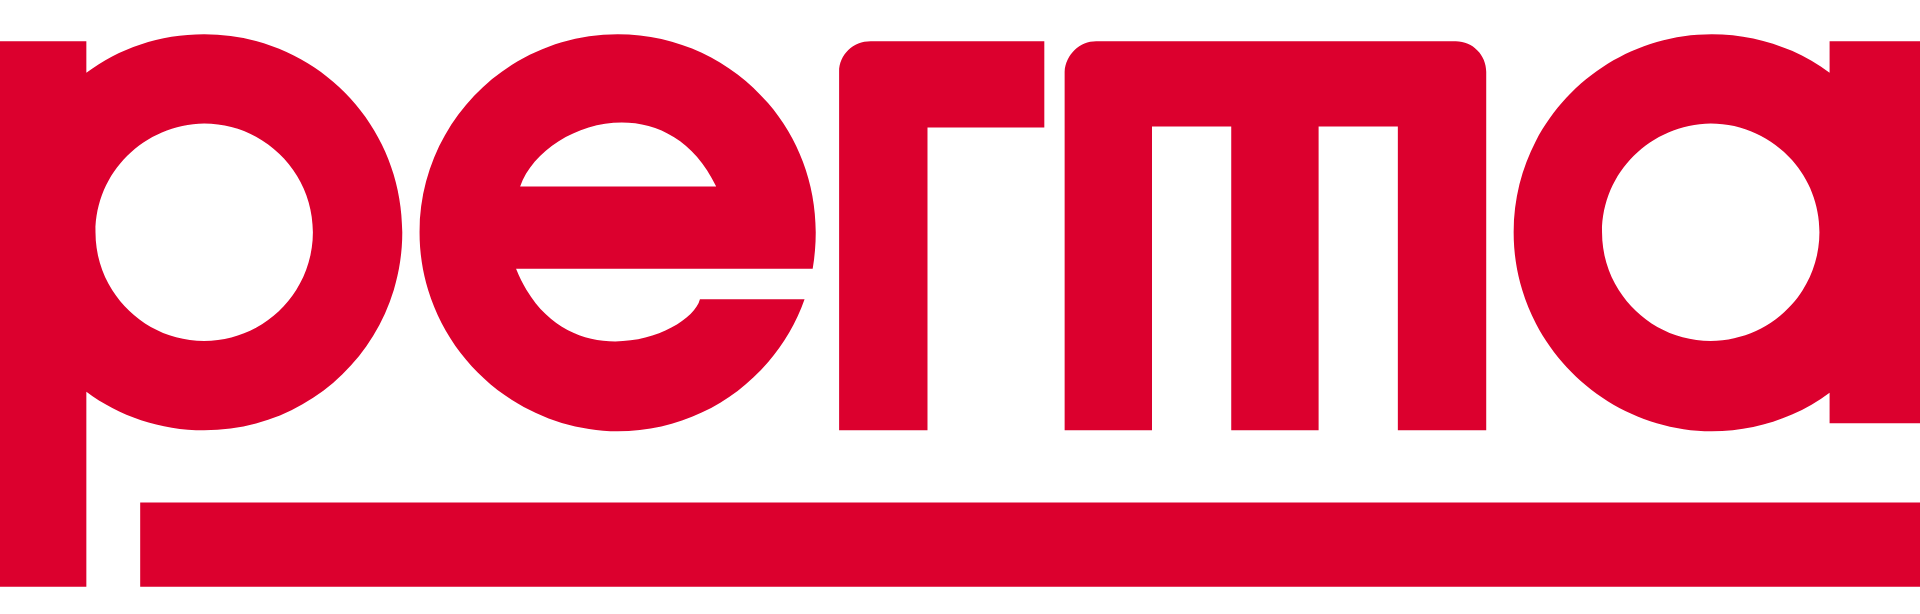 Worner logo